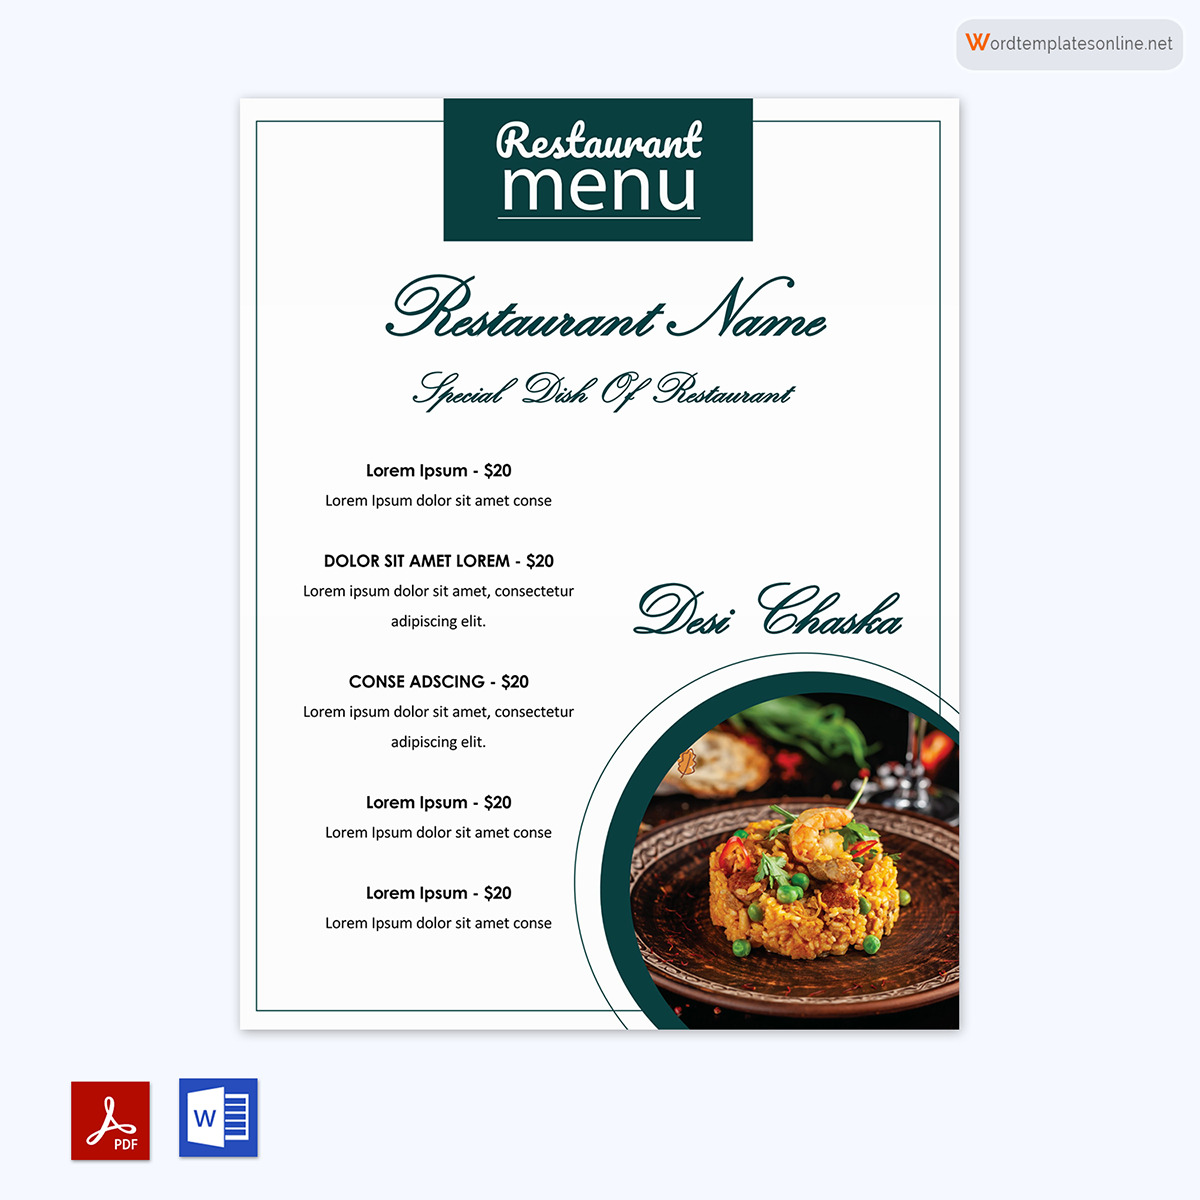 Restaurant menu free template 09